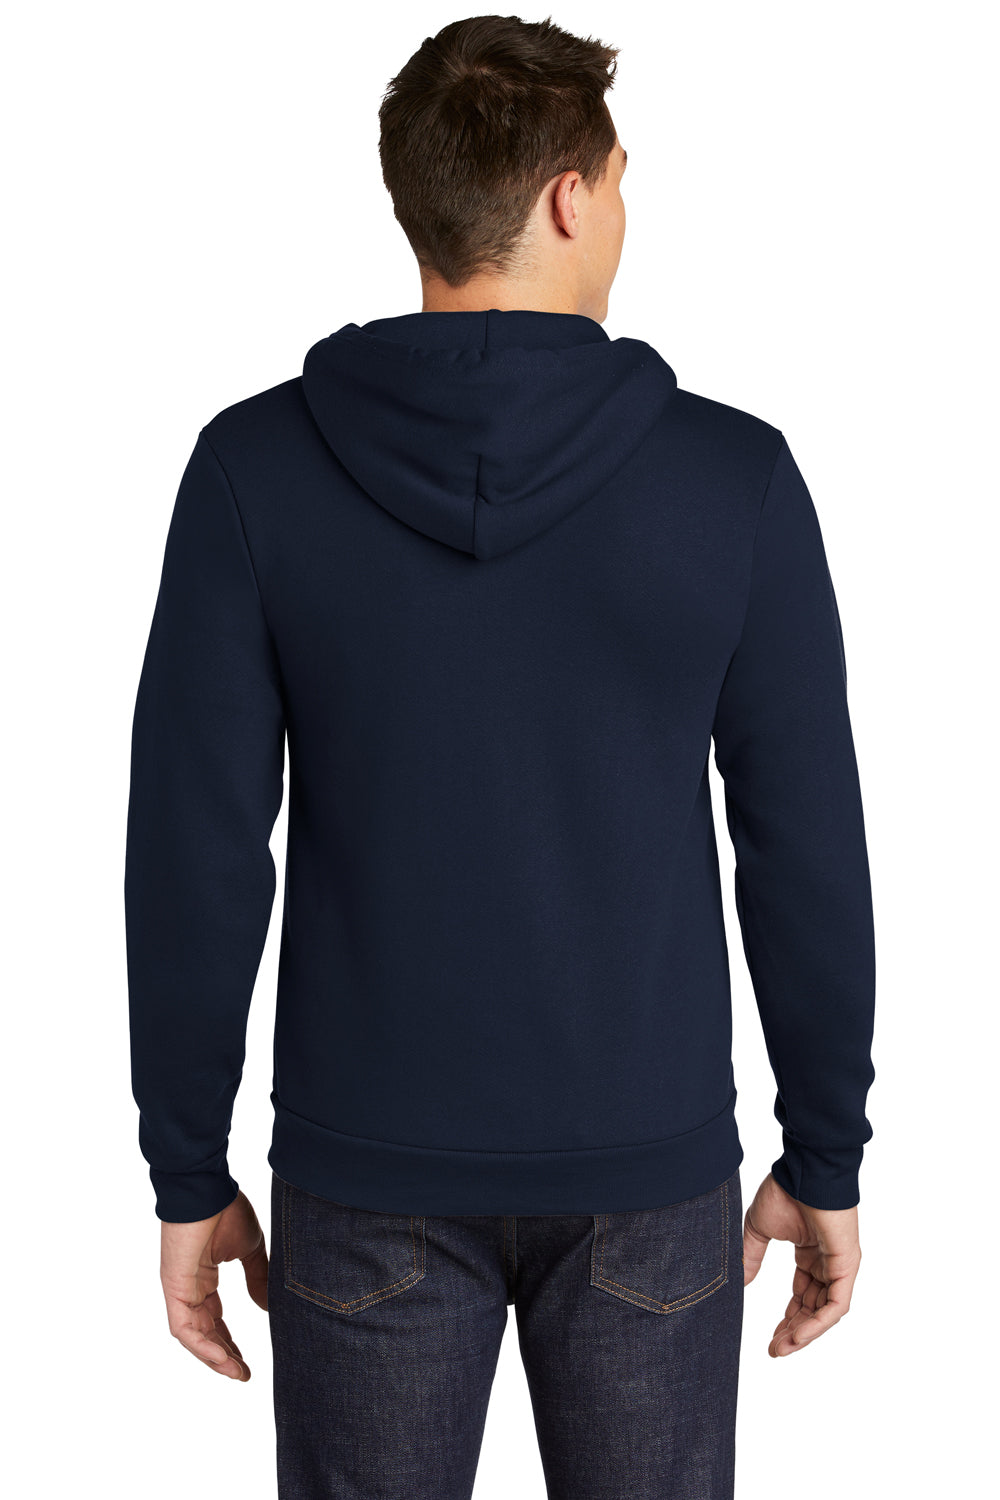 American Apparel Mens USA Made Flex Fleece Full Zip Hooded Sweatshirt  Hoodie - Navy Blue - Closeout